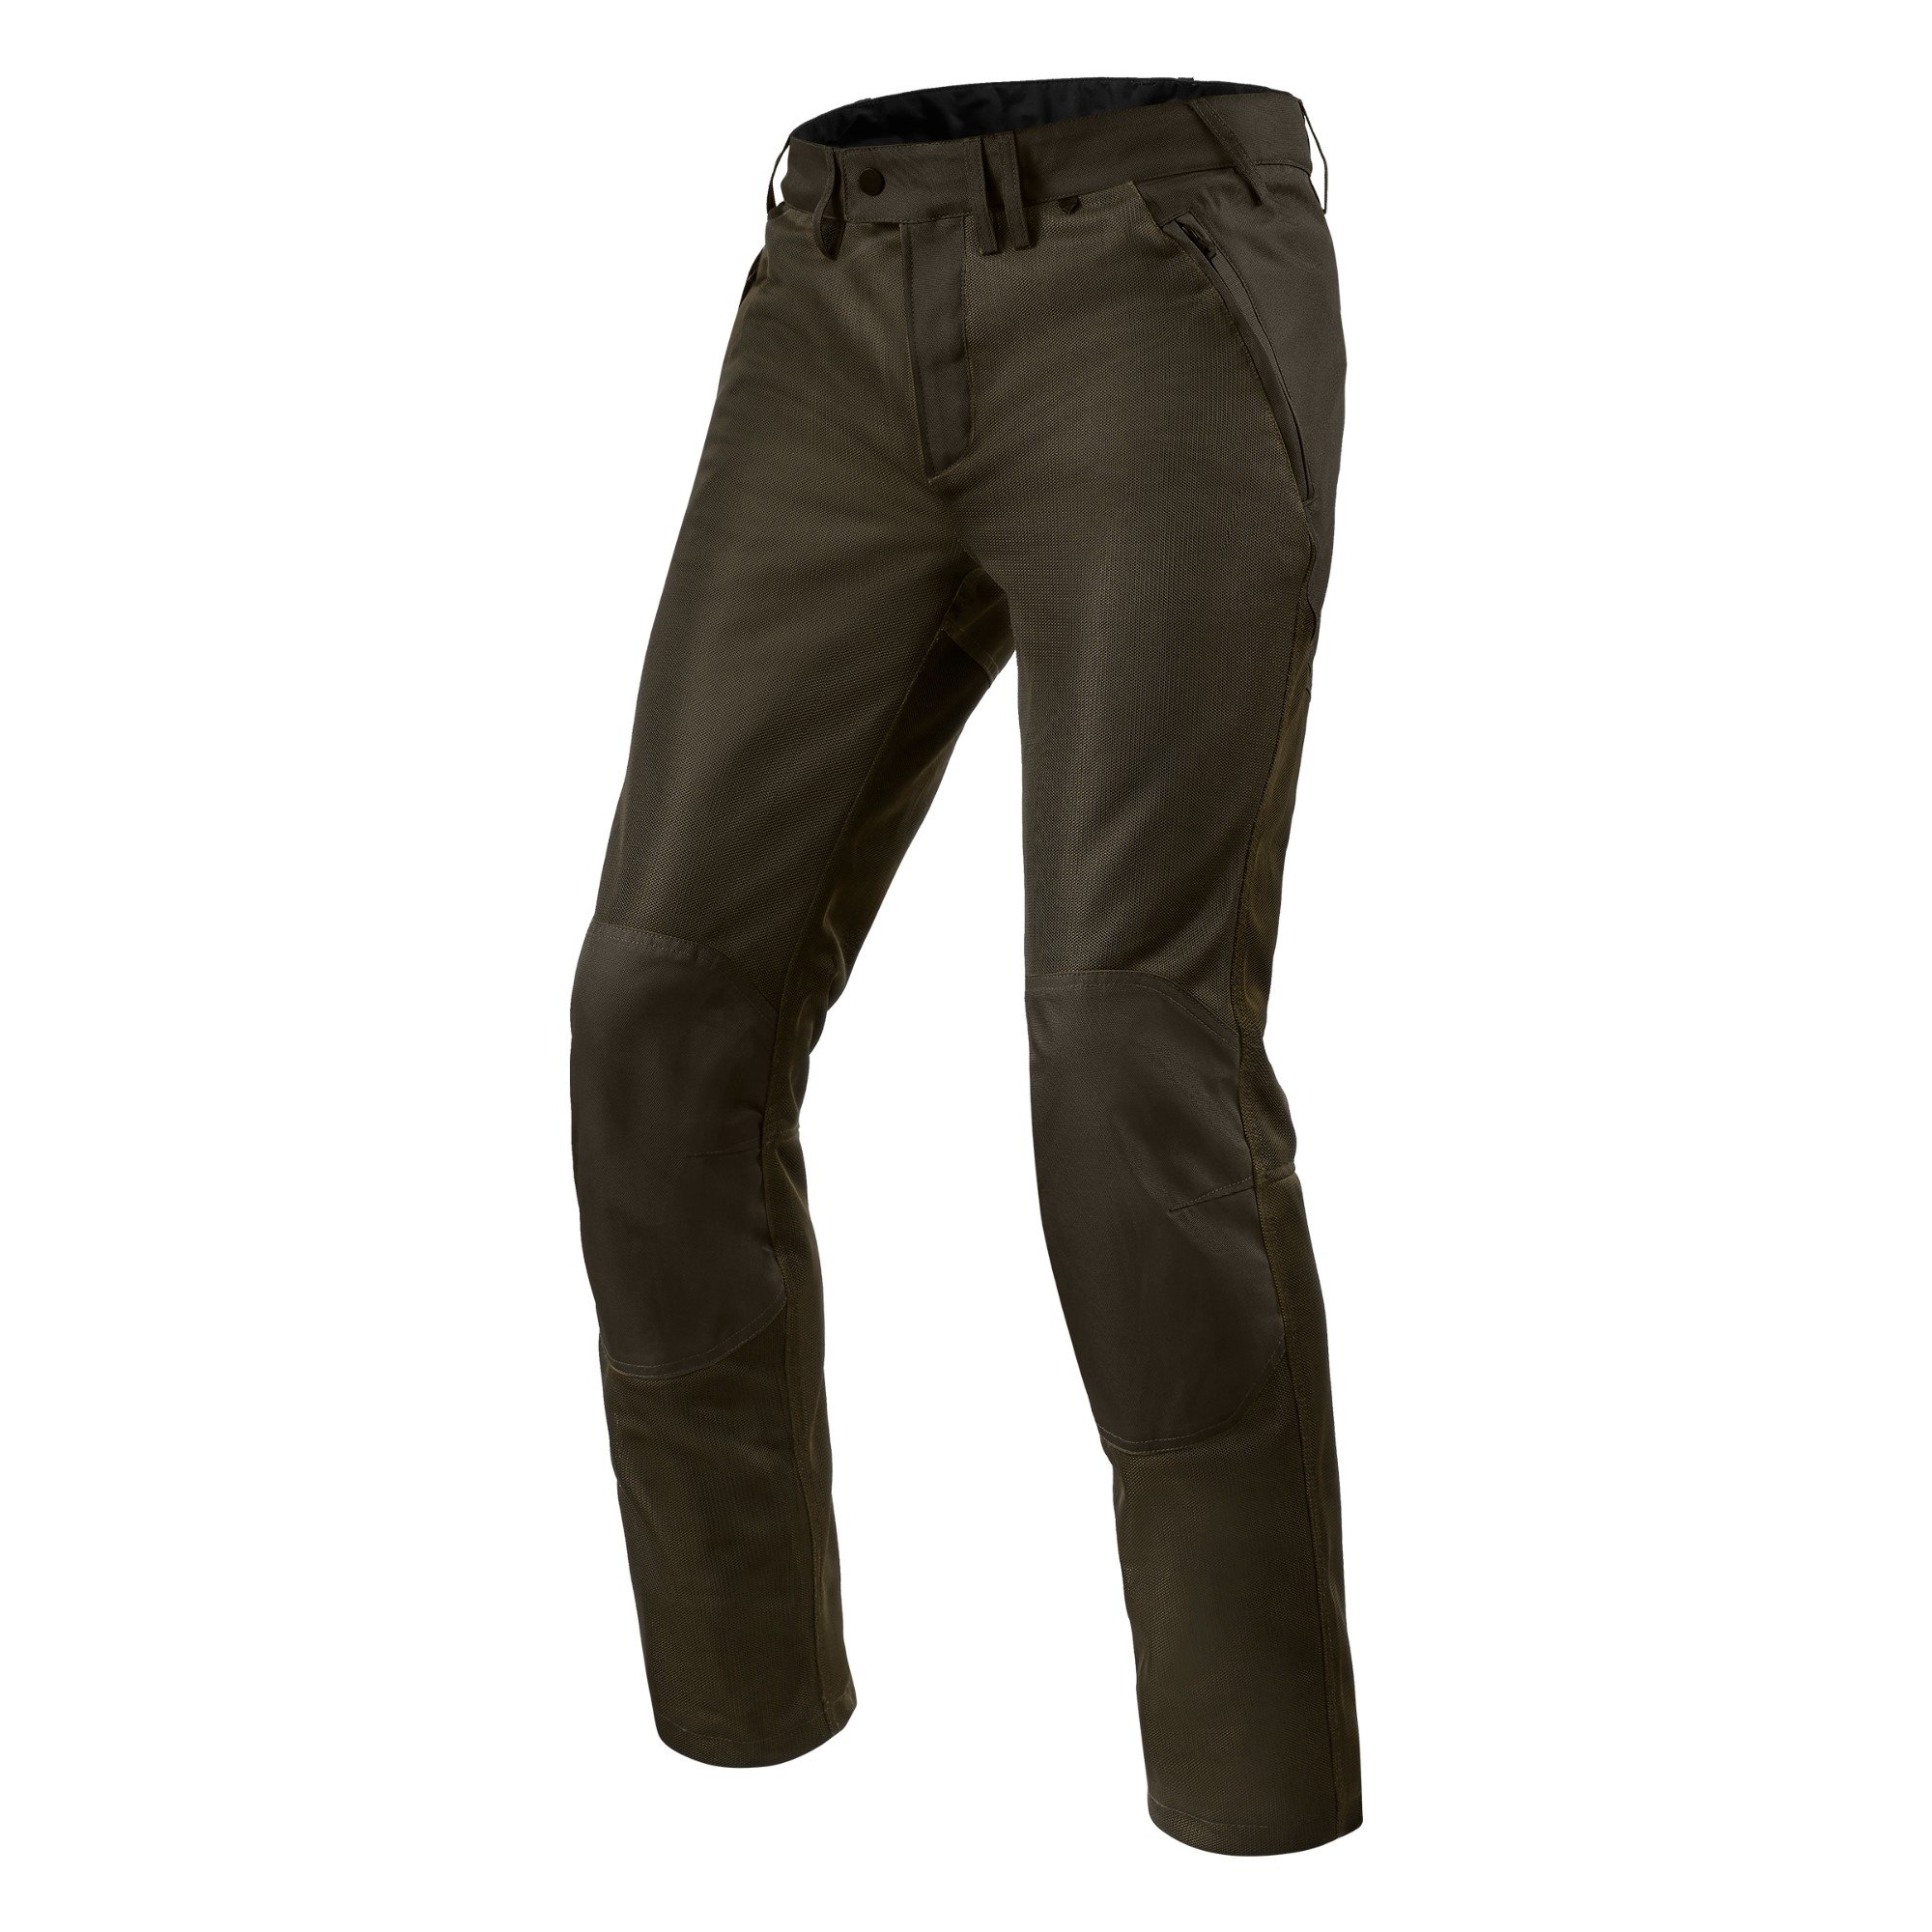 Image of REV'IT! Pants Eclipse 2 Black Olive Short Motorcycle Pants Size L ID 8700001368803